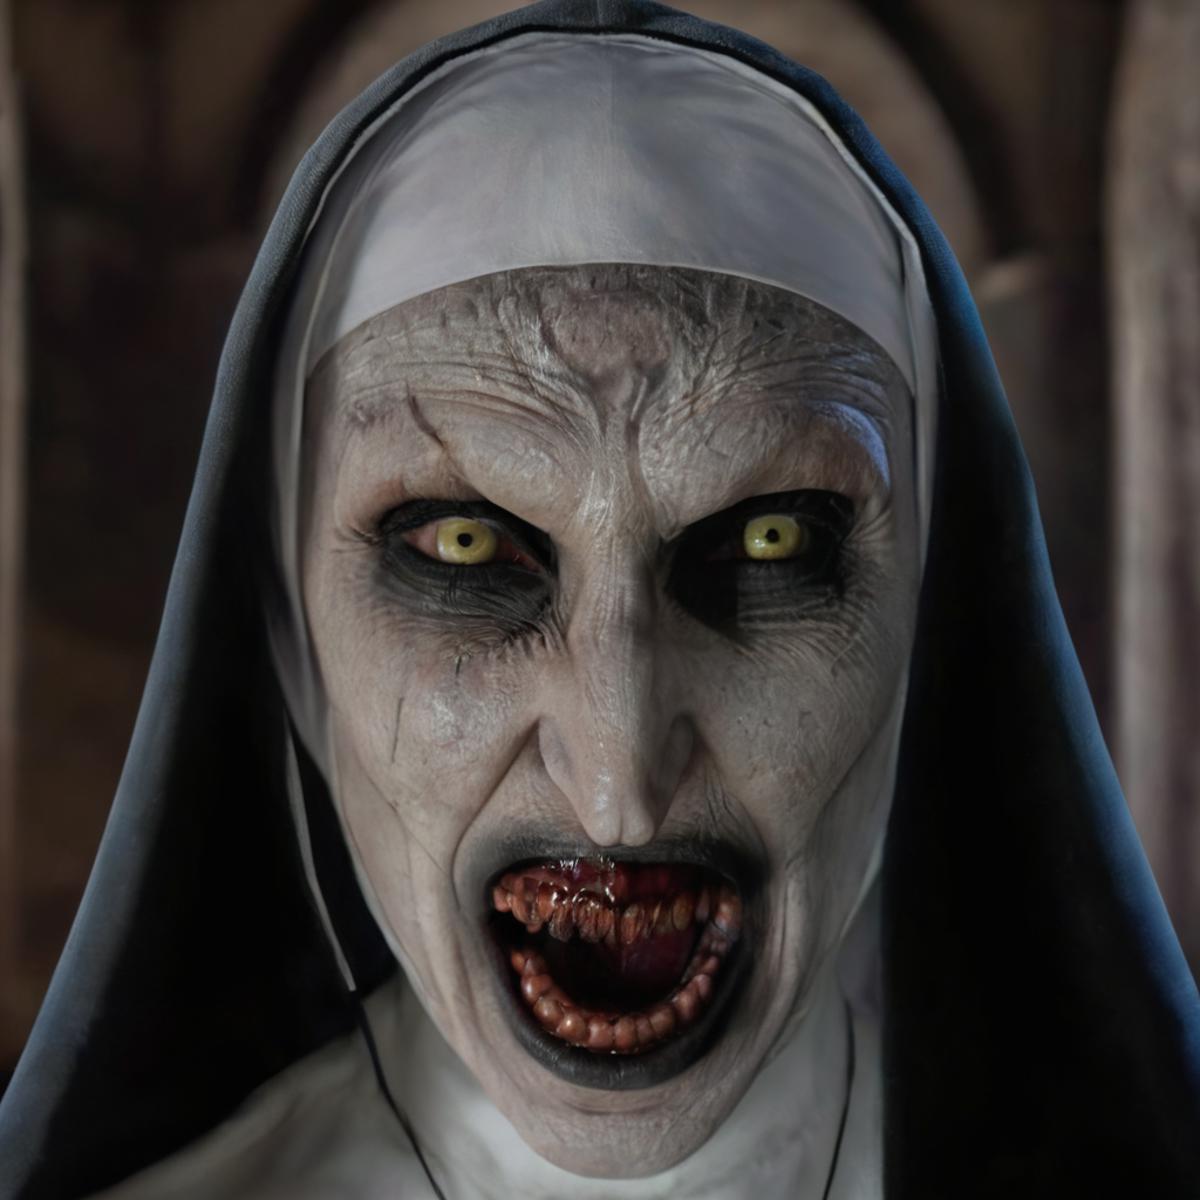 Valak (The Nun) image by jorz